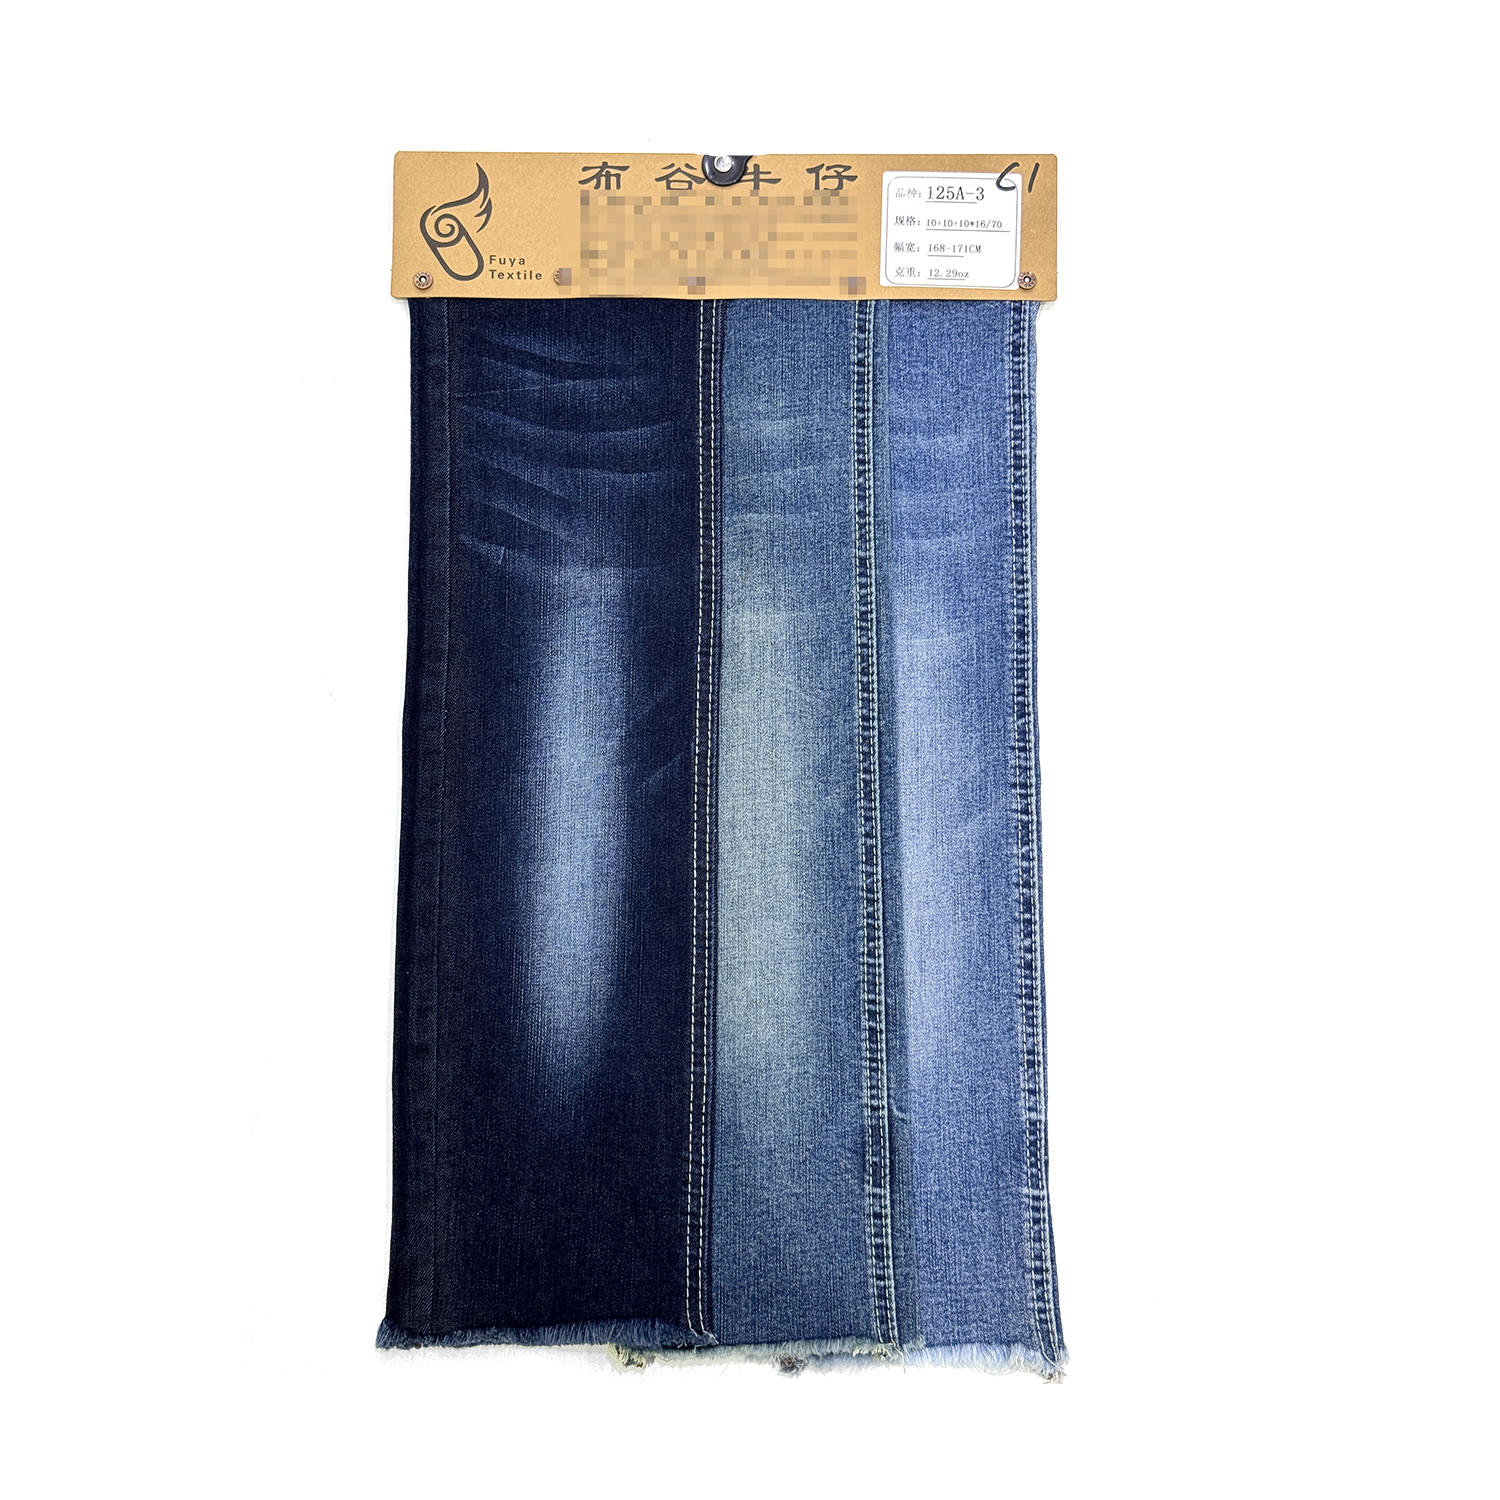 125A-3 stretch jeans fabric raw denim fabric rolls for women's jean